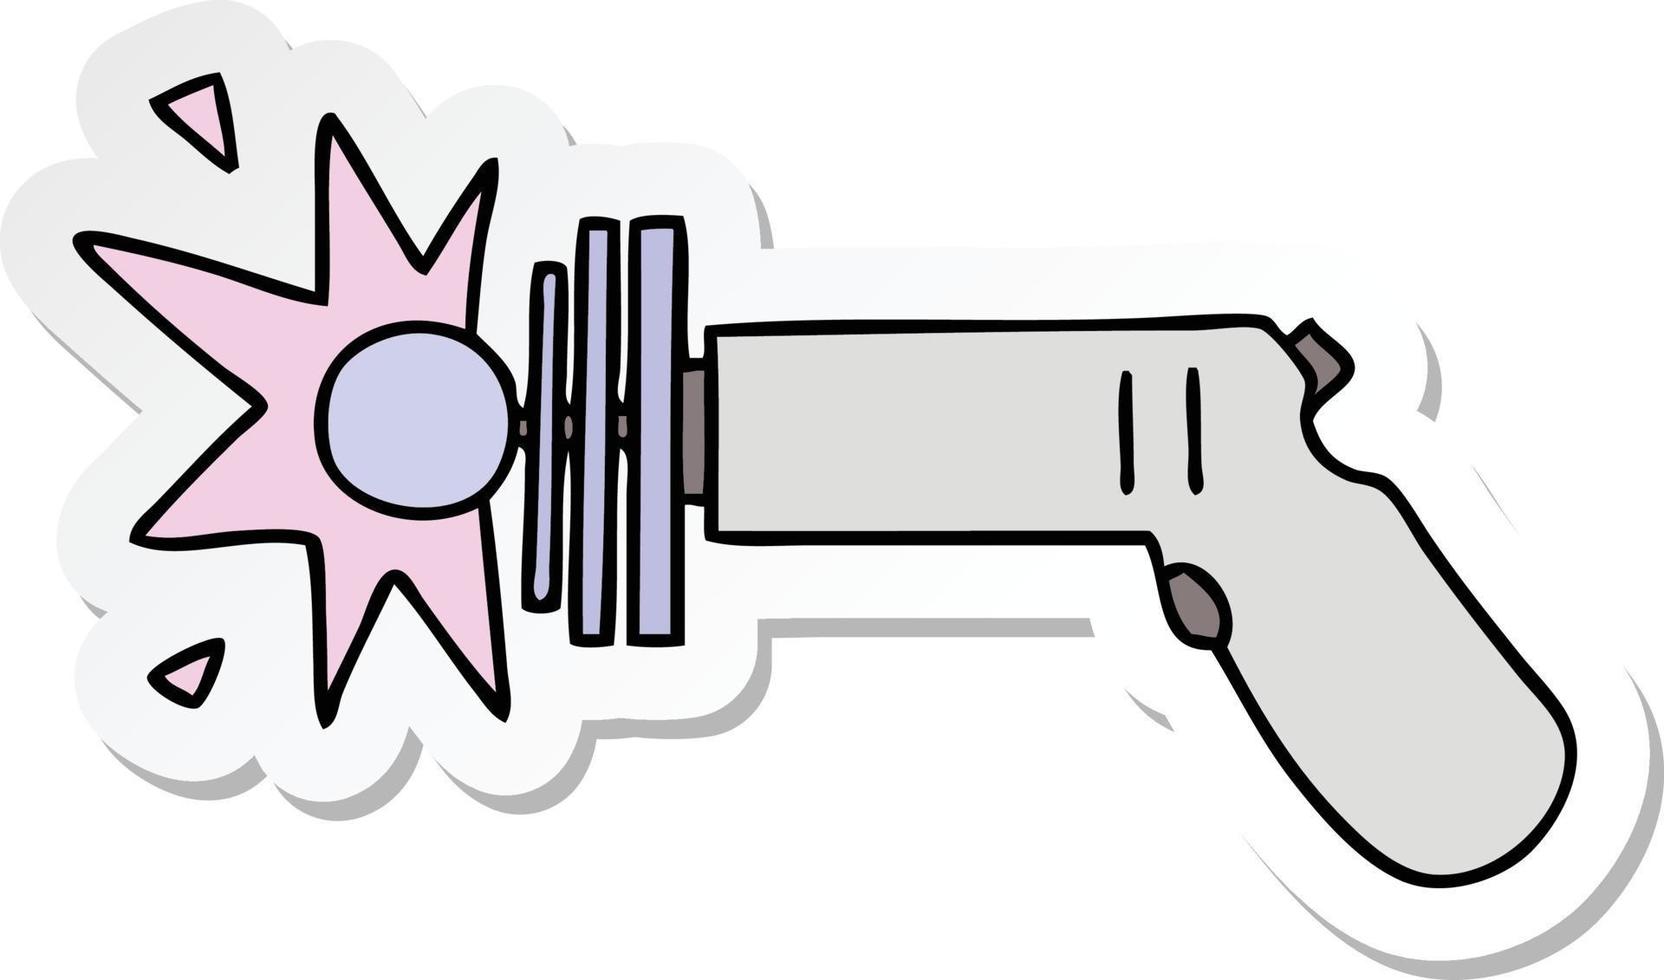 sticker of a quirky hand drawn cartoon ray gun vector